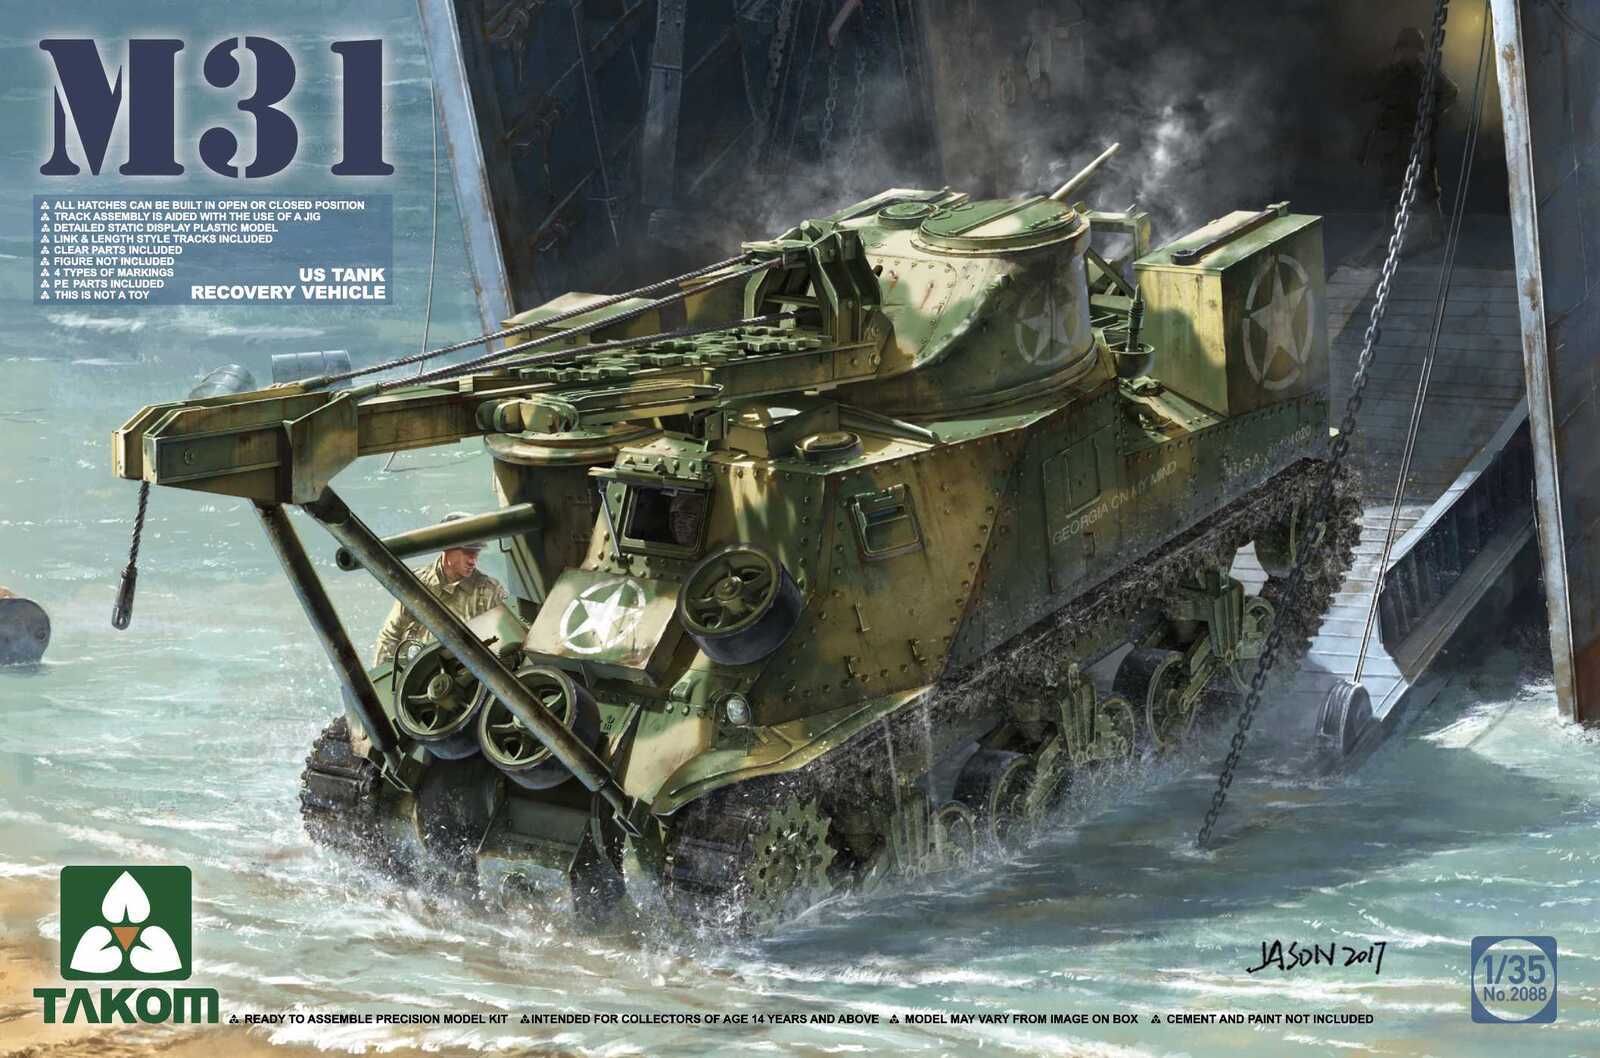 Purchase Takom 1/35 M31 Us Tank Recovery Vehicle Plastic Model Kit [2088]